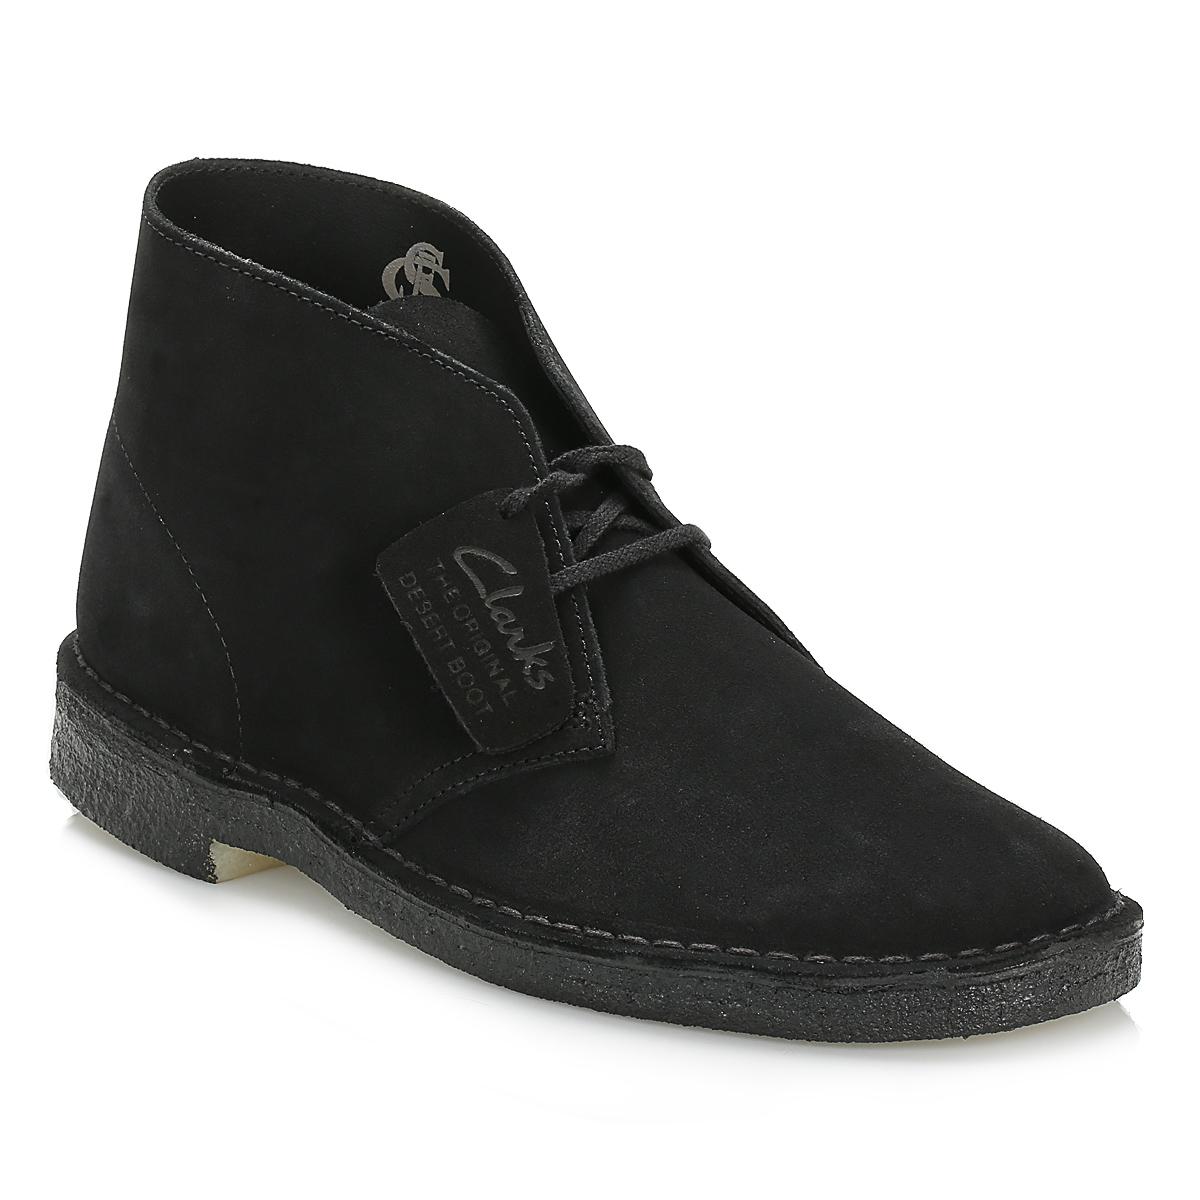 clarks originals black suede desert boots